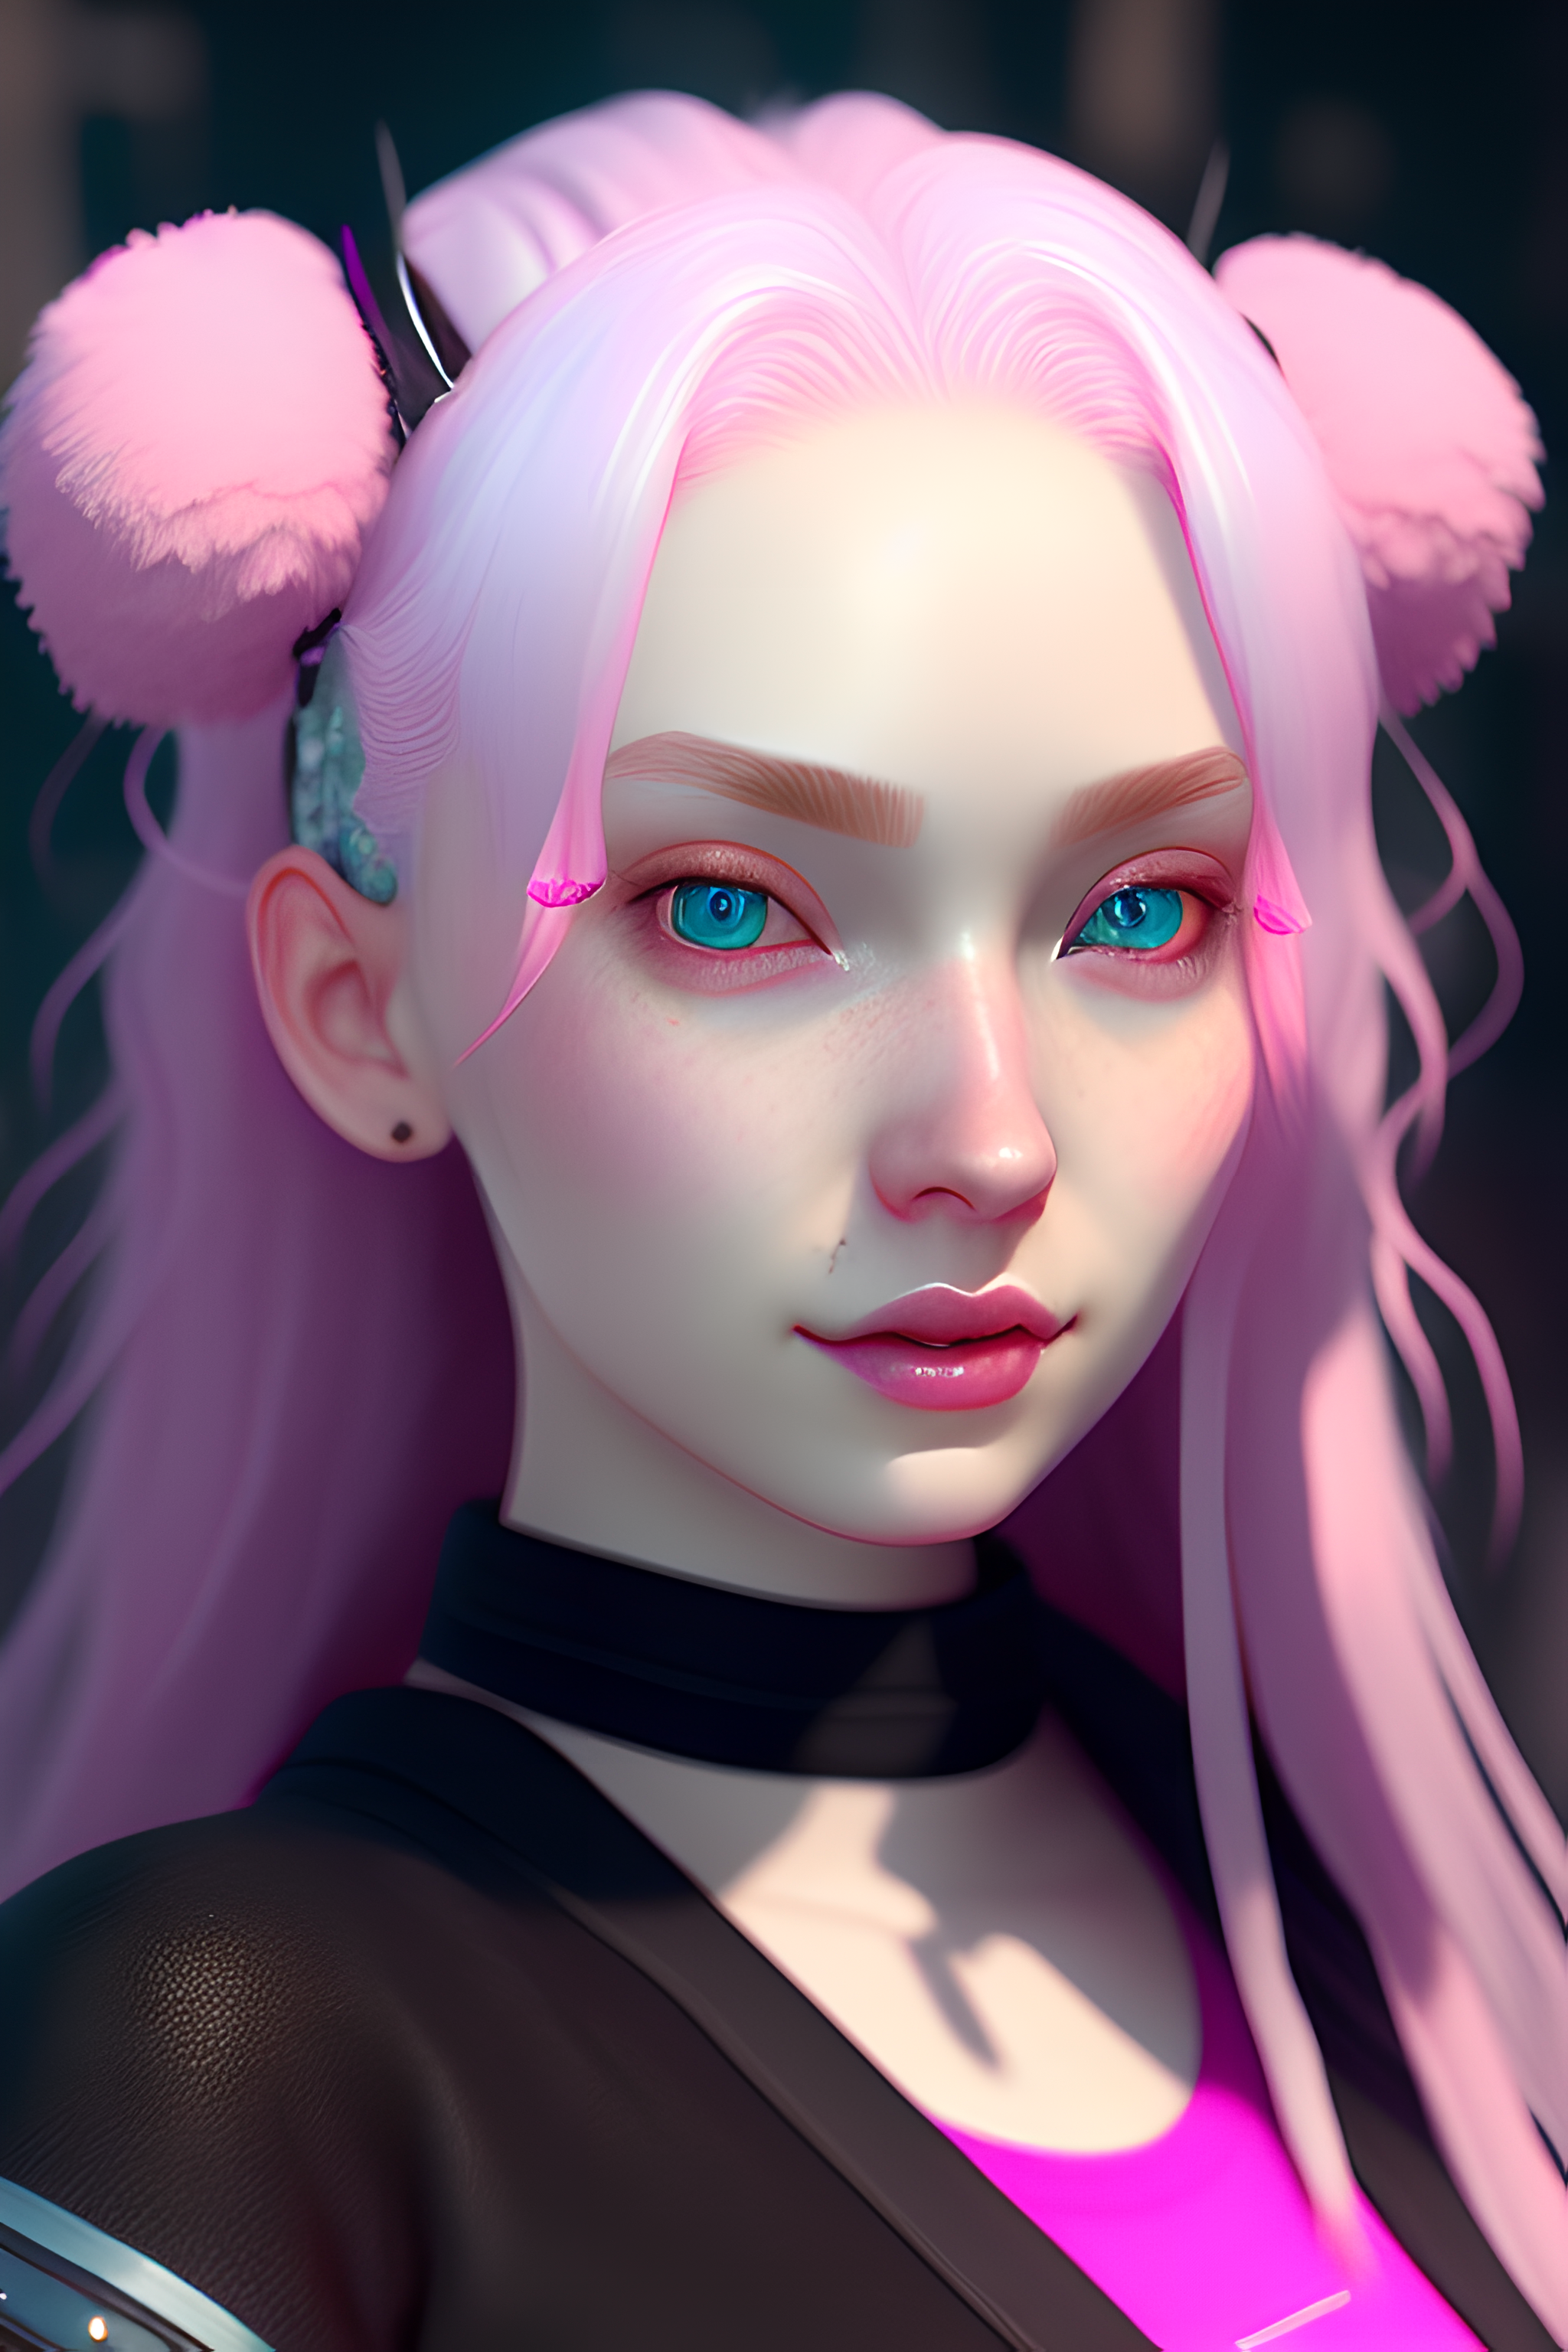 General 2048x3072 pink hair digital art AI art women Stable Diffusion portrait display